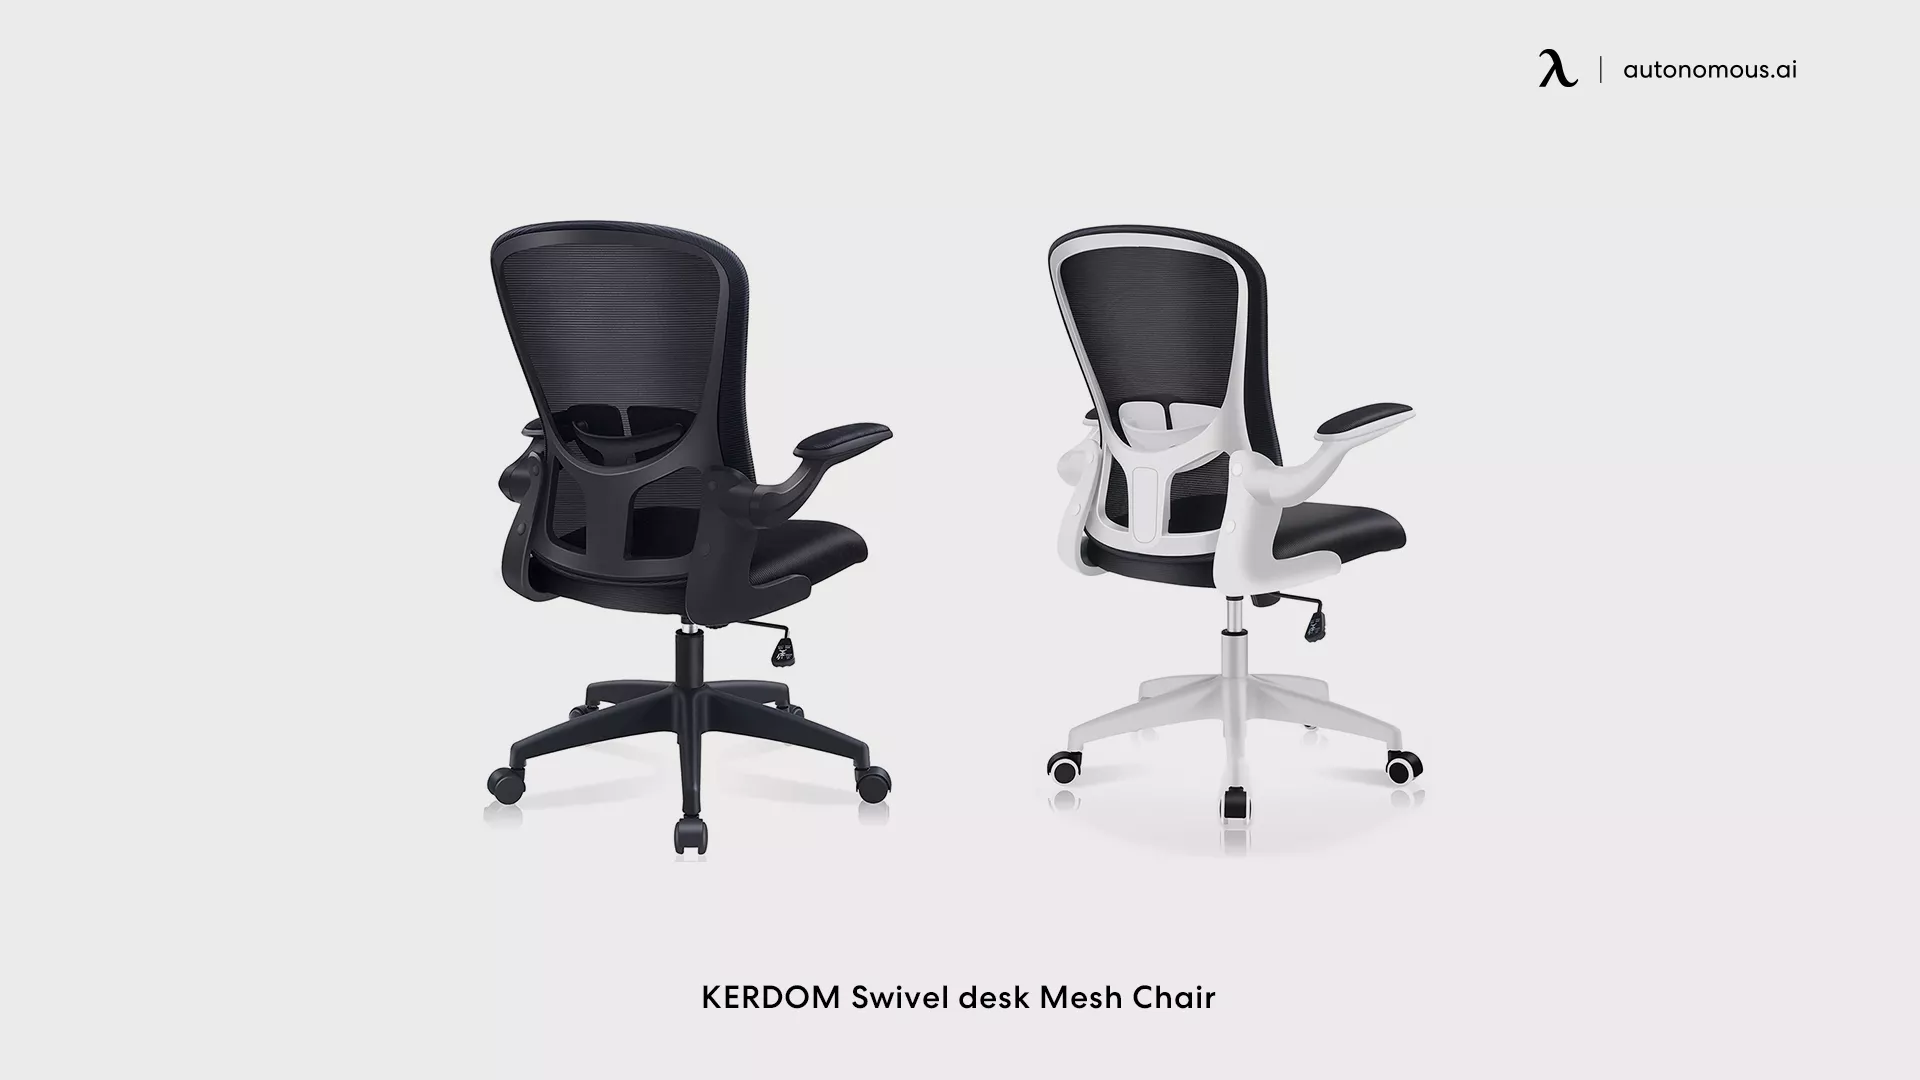 KERDOM Swivel Mesh office chair under $200